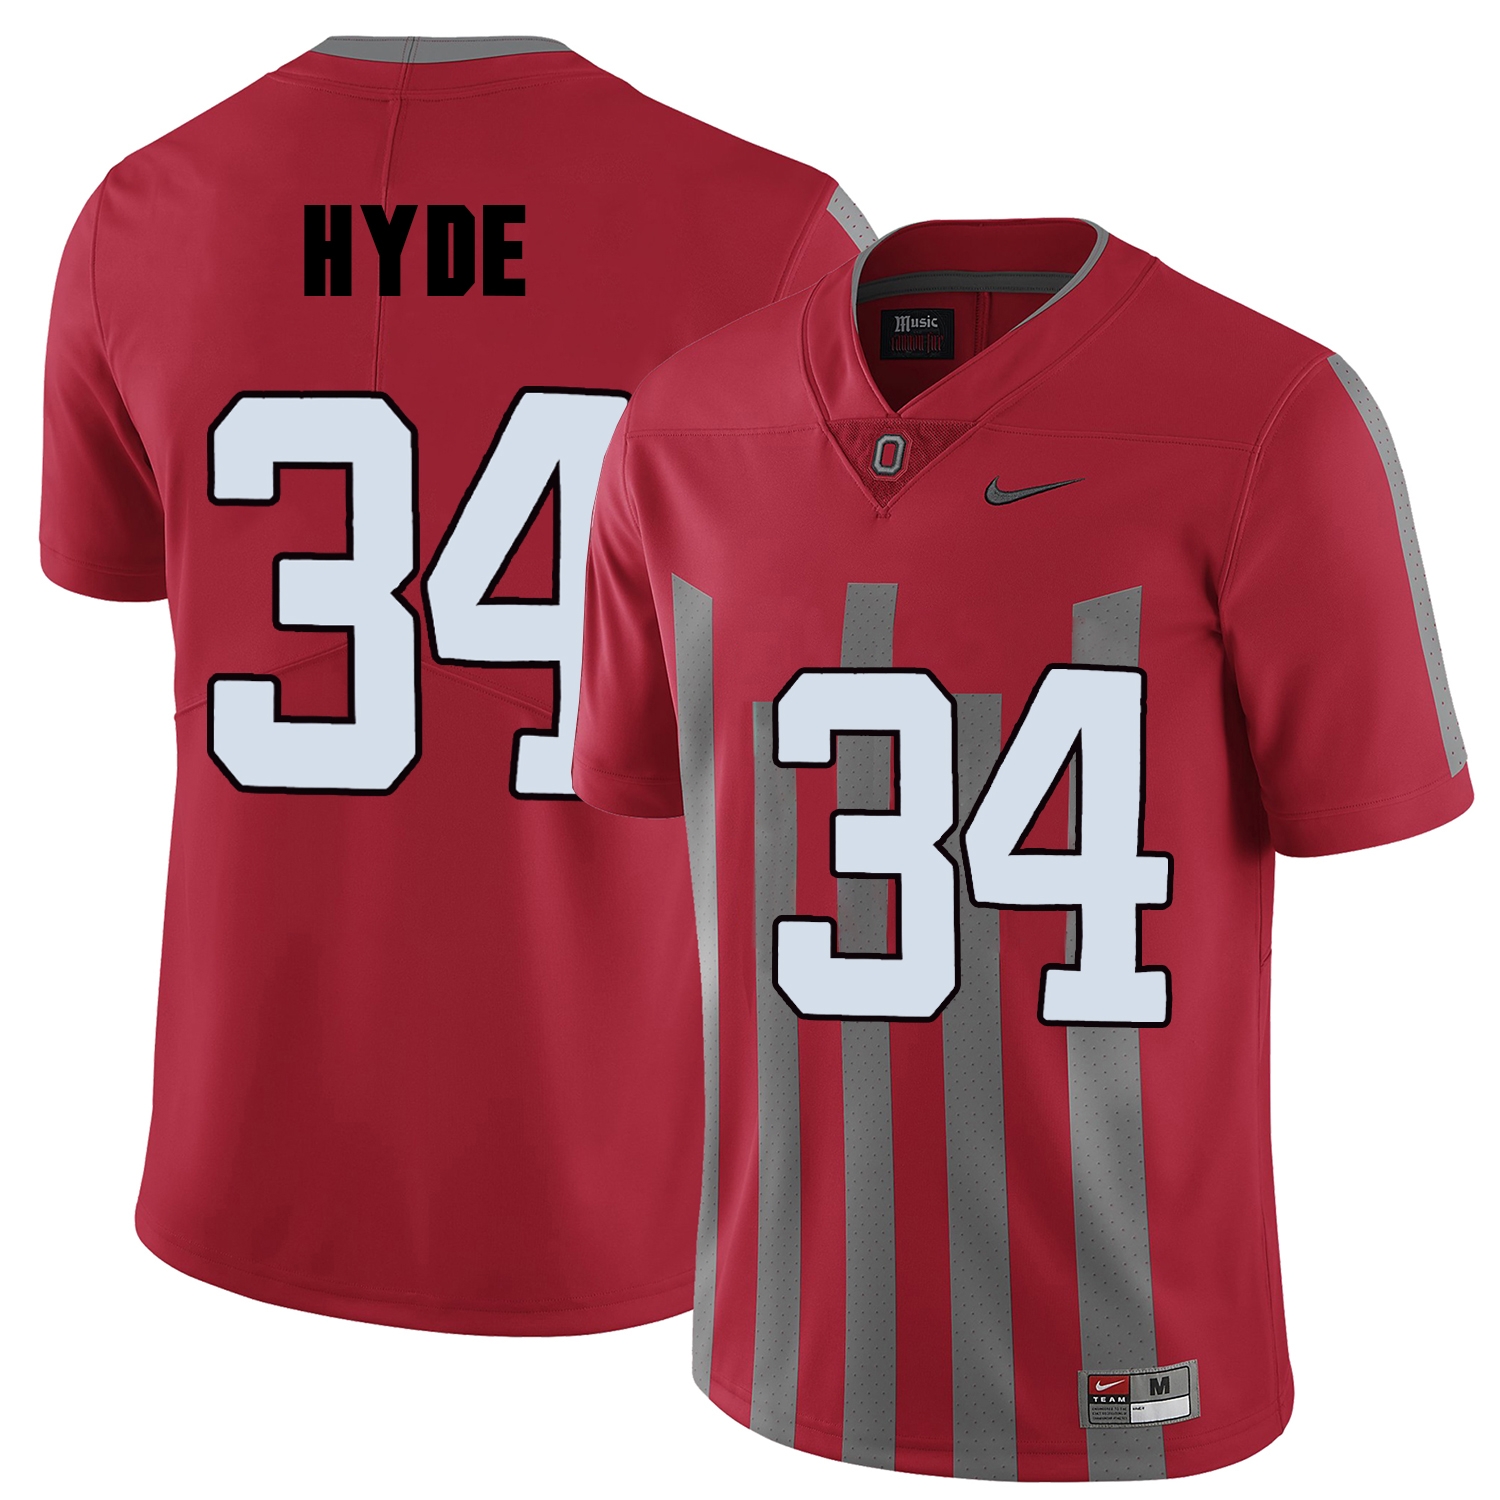 Ohio State Buckeyes Men's NCAA CameCarlos Hyde #34 Red Elite College Football Jersey VKN1249PU